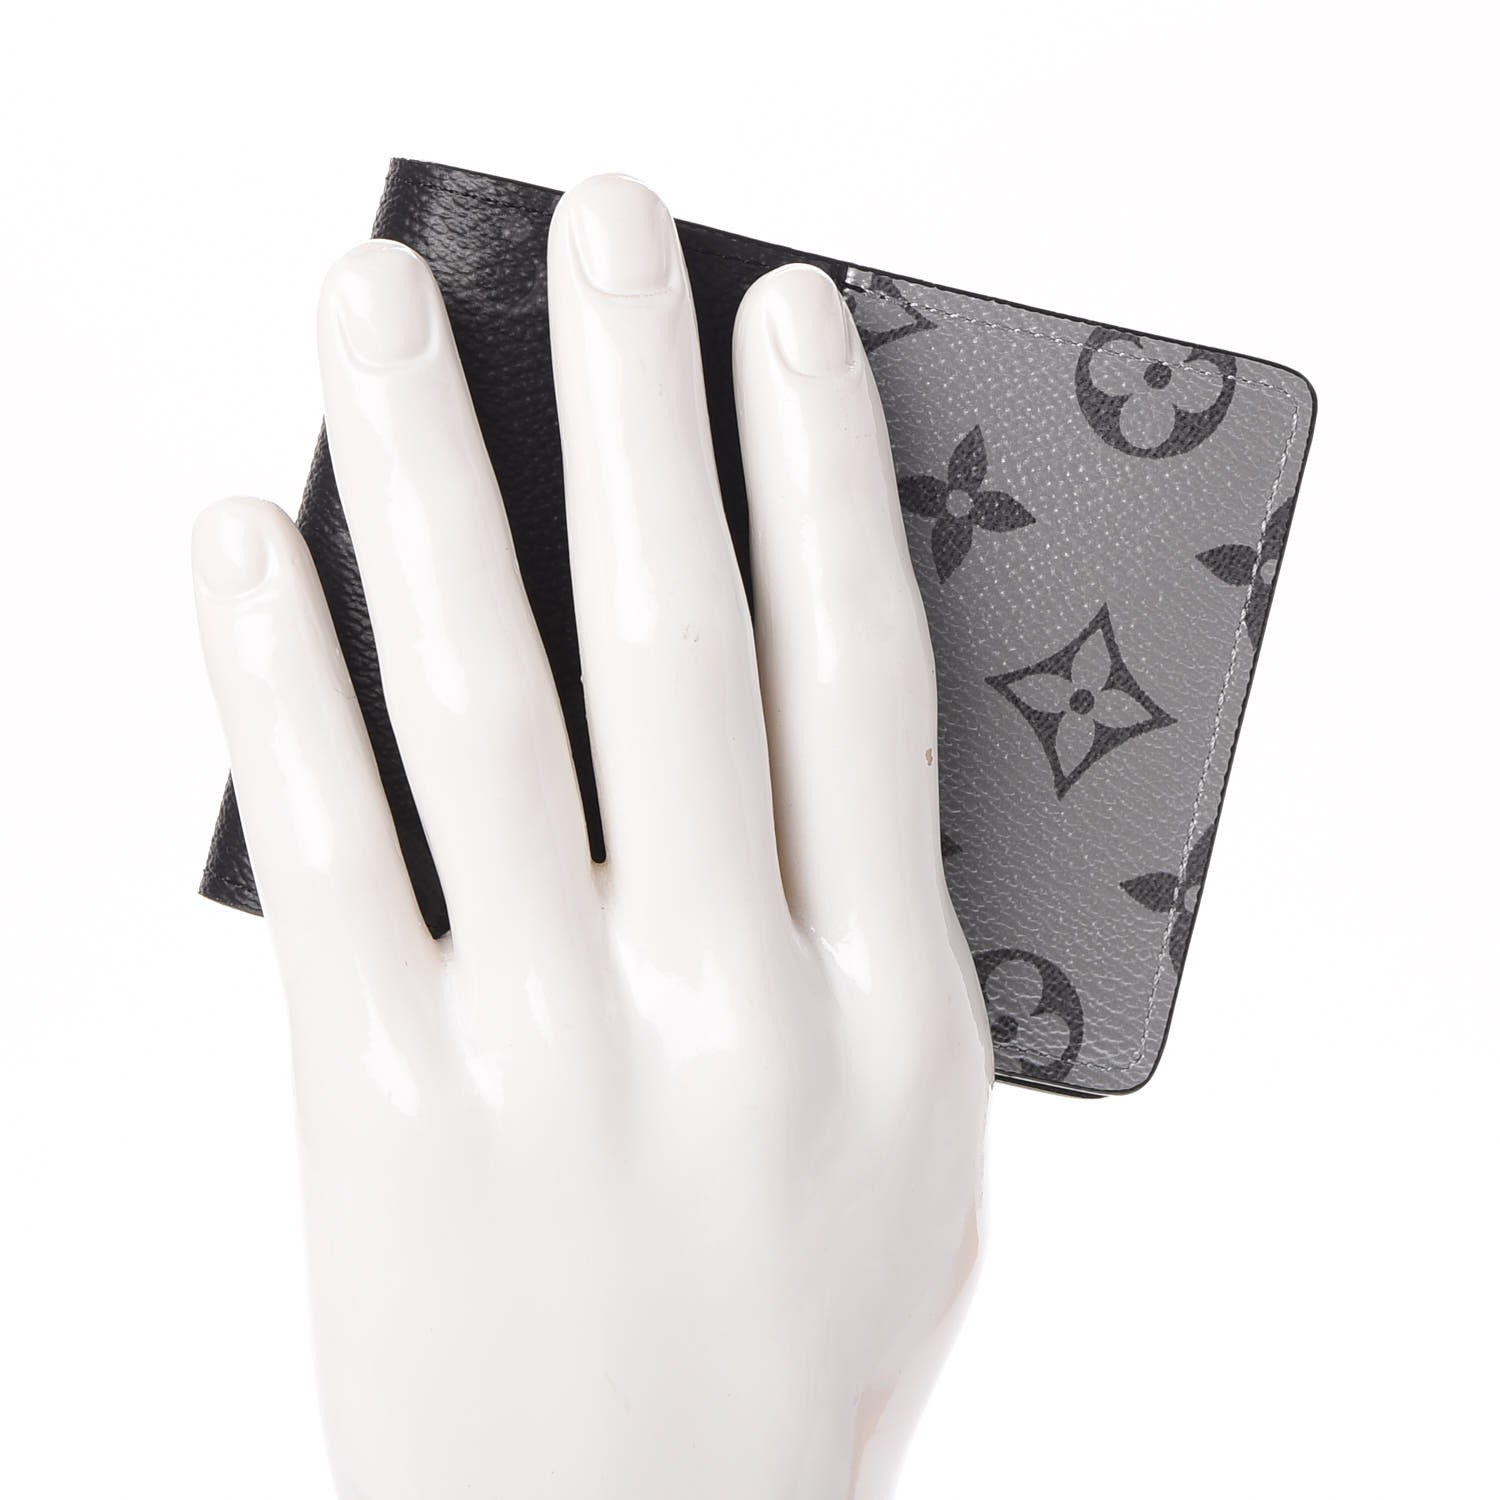 Louis Vuitton Monogram Multiple Mens Bifold Wallet!